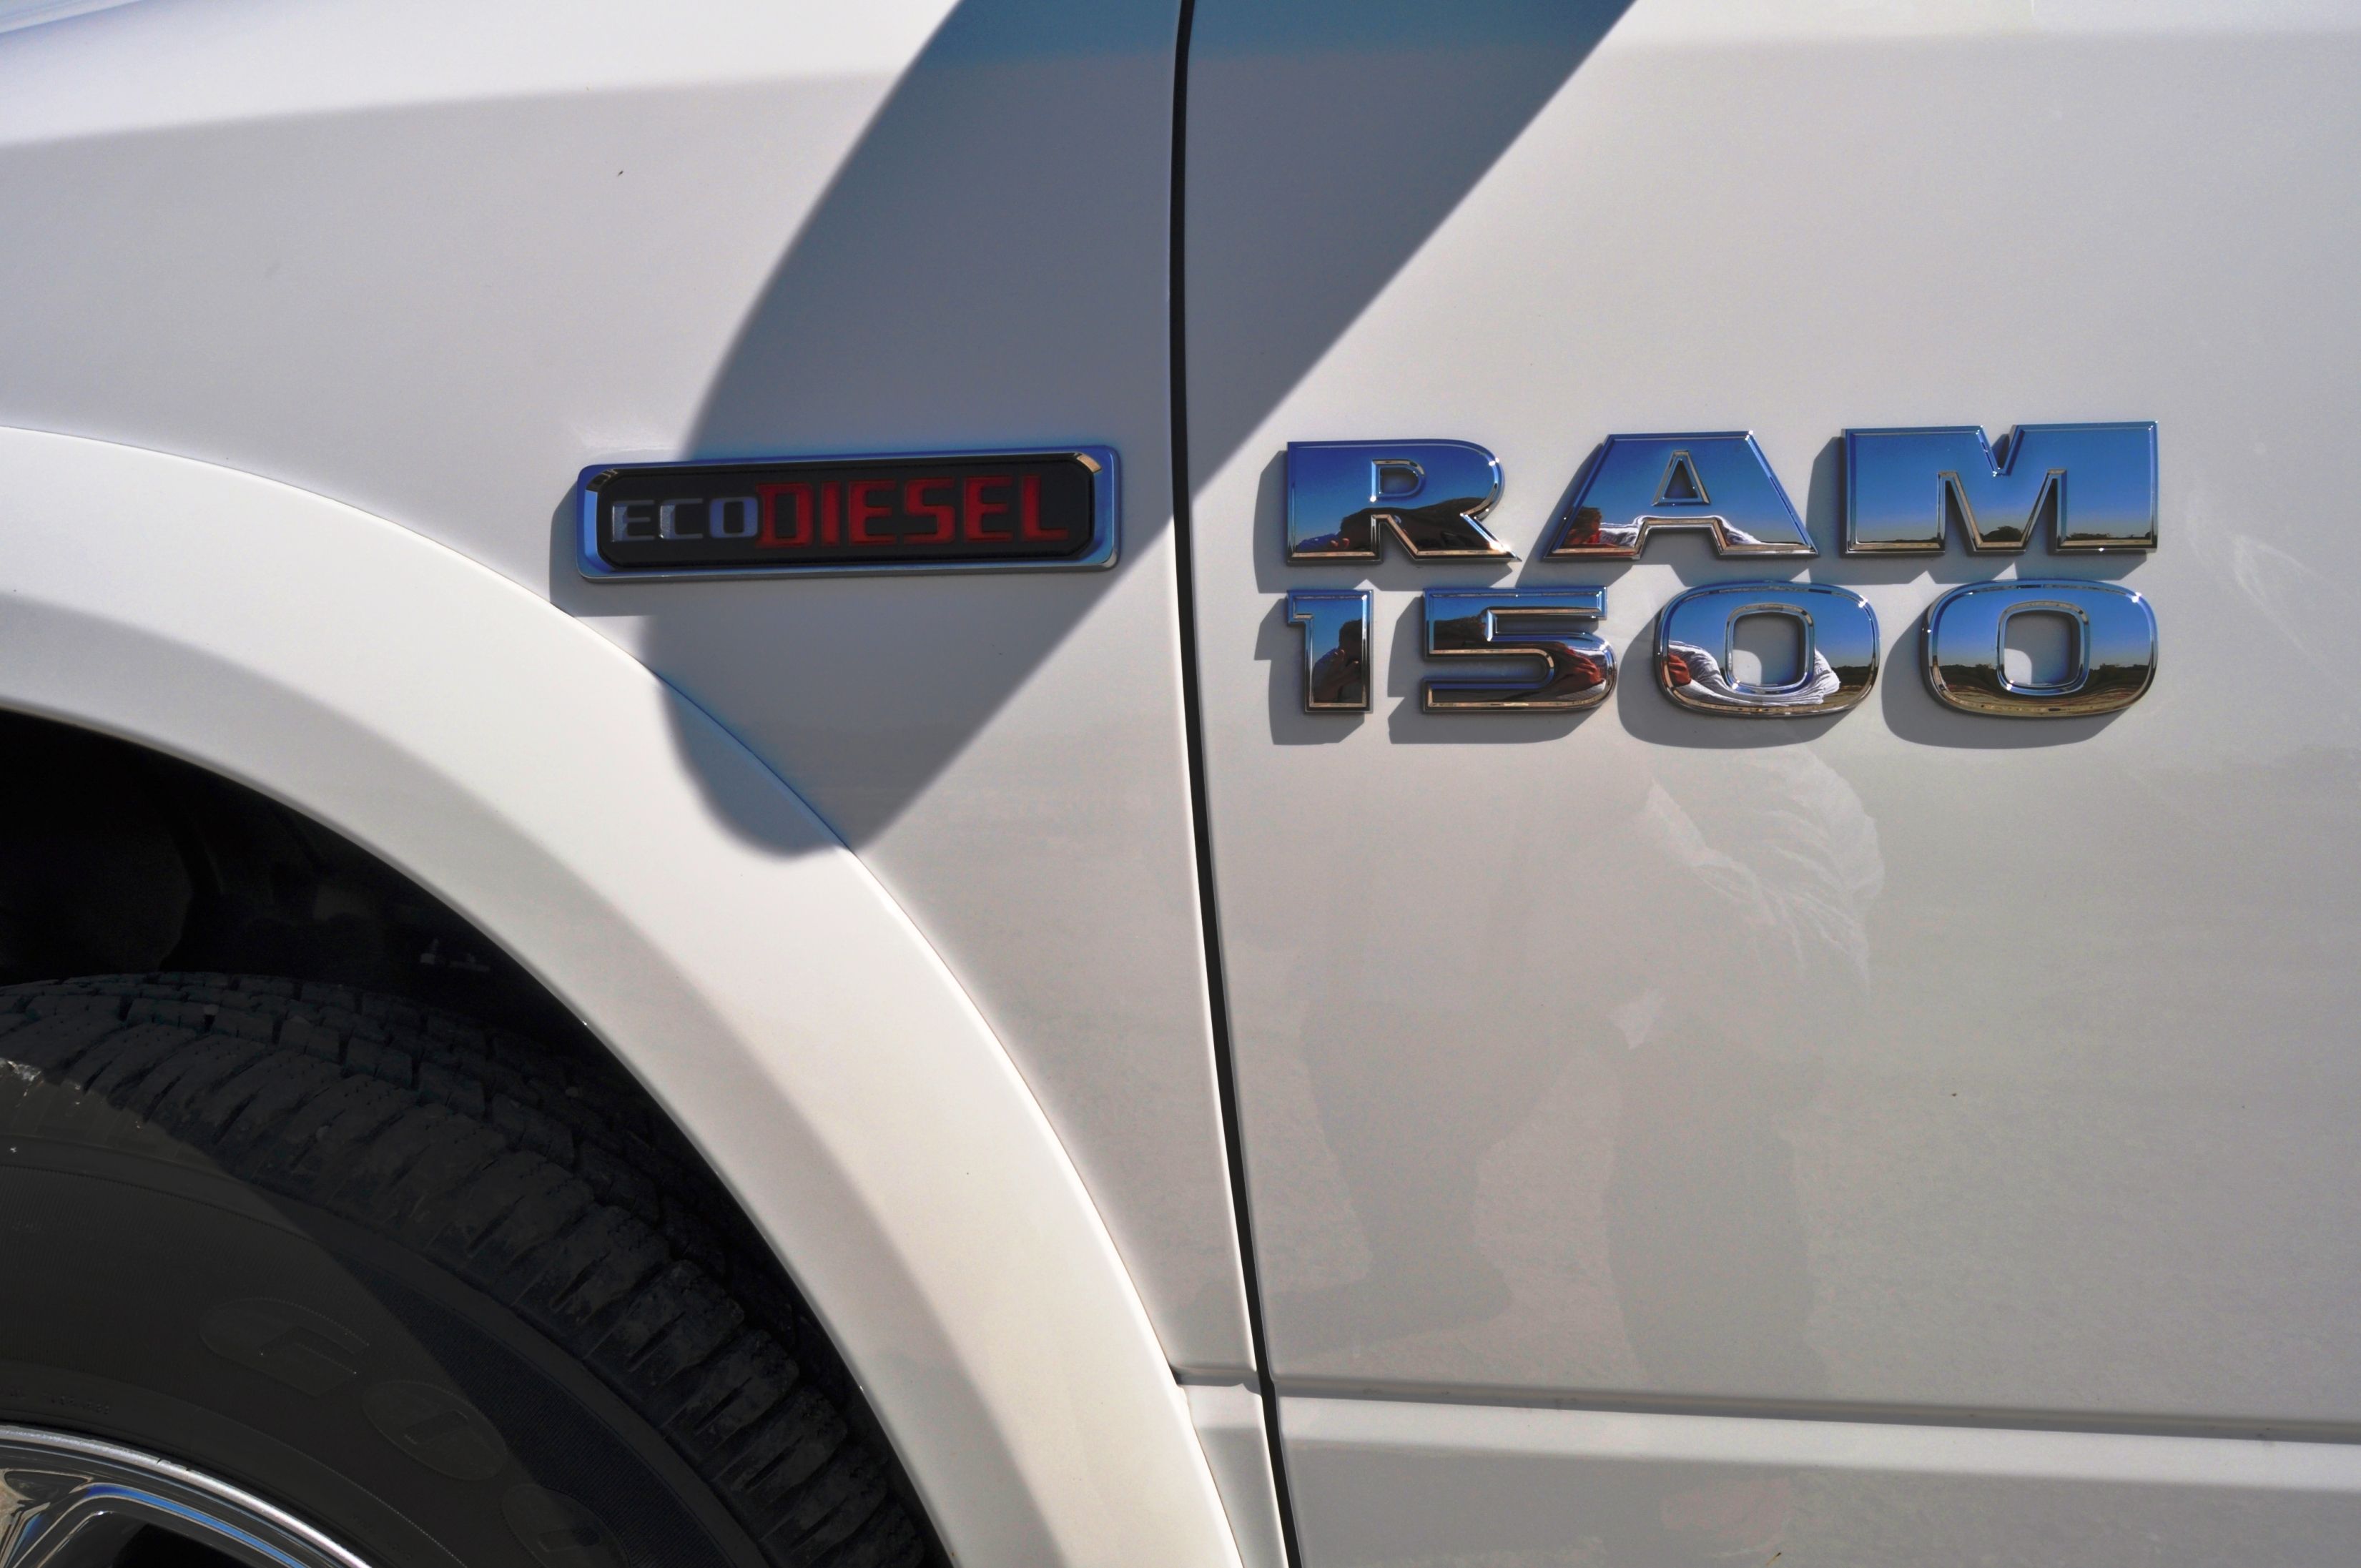 2014 Ram 1500 EcoDiesel - Driven